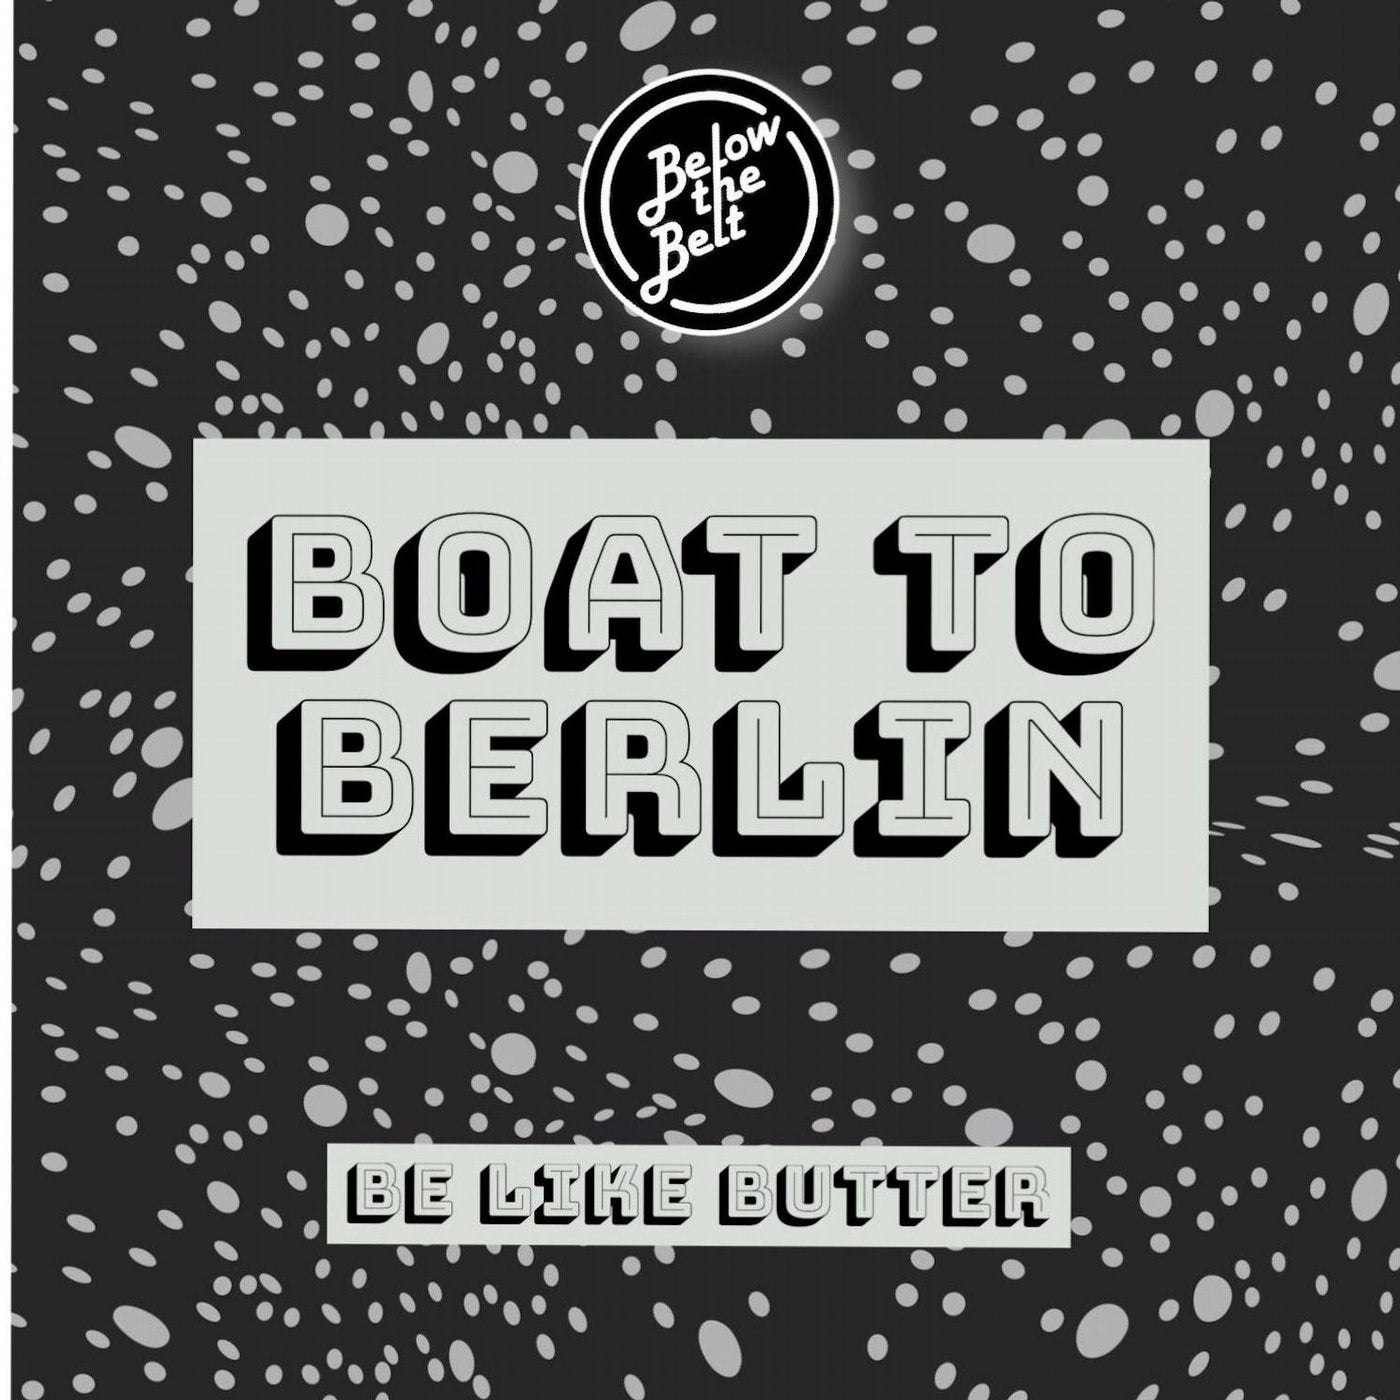 Boat To Berlin